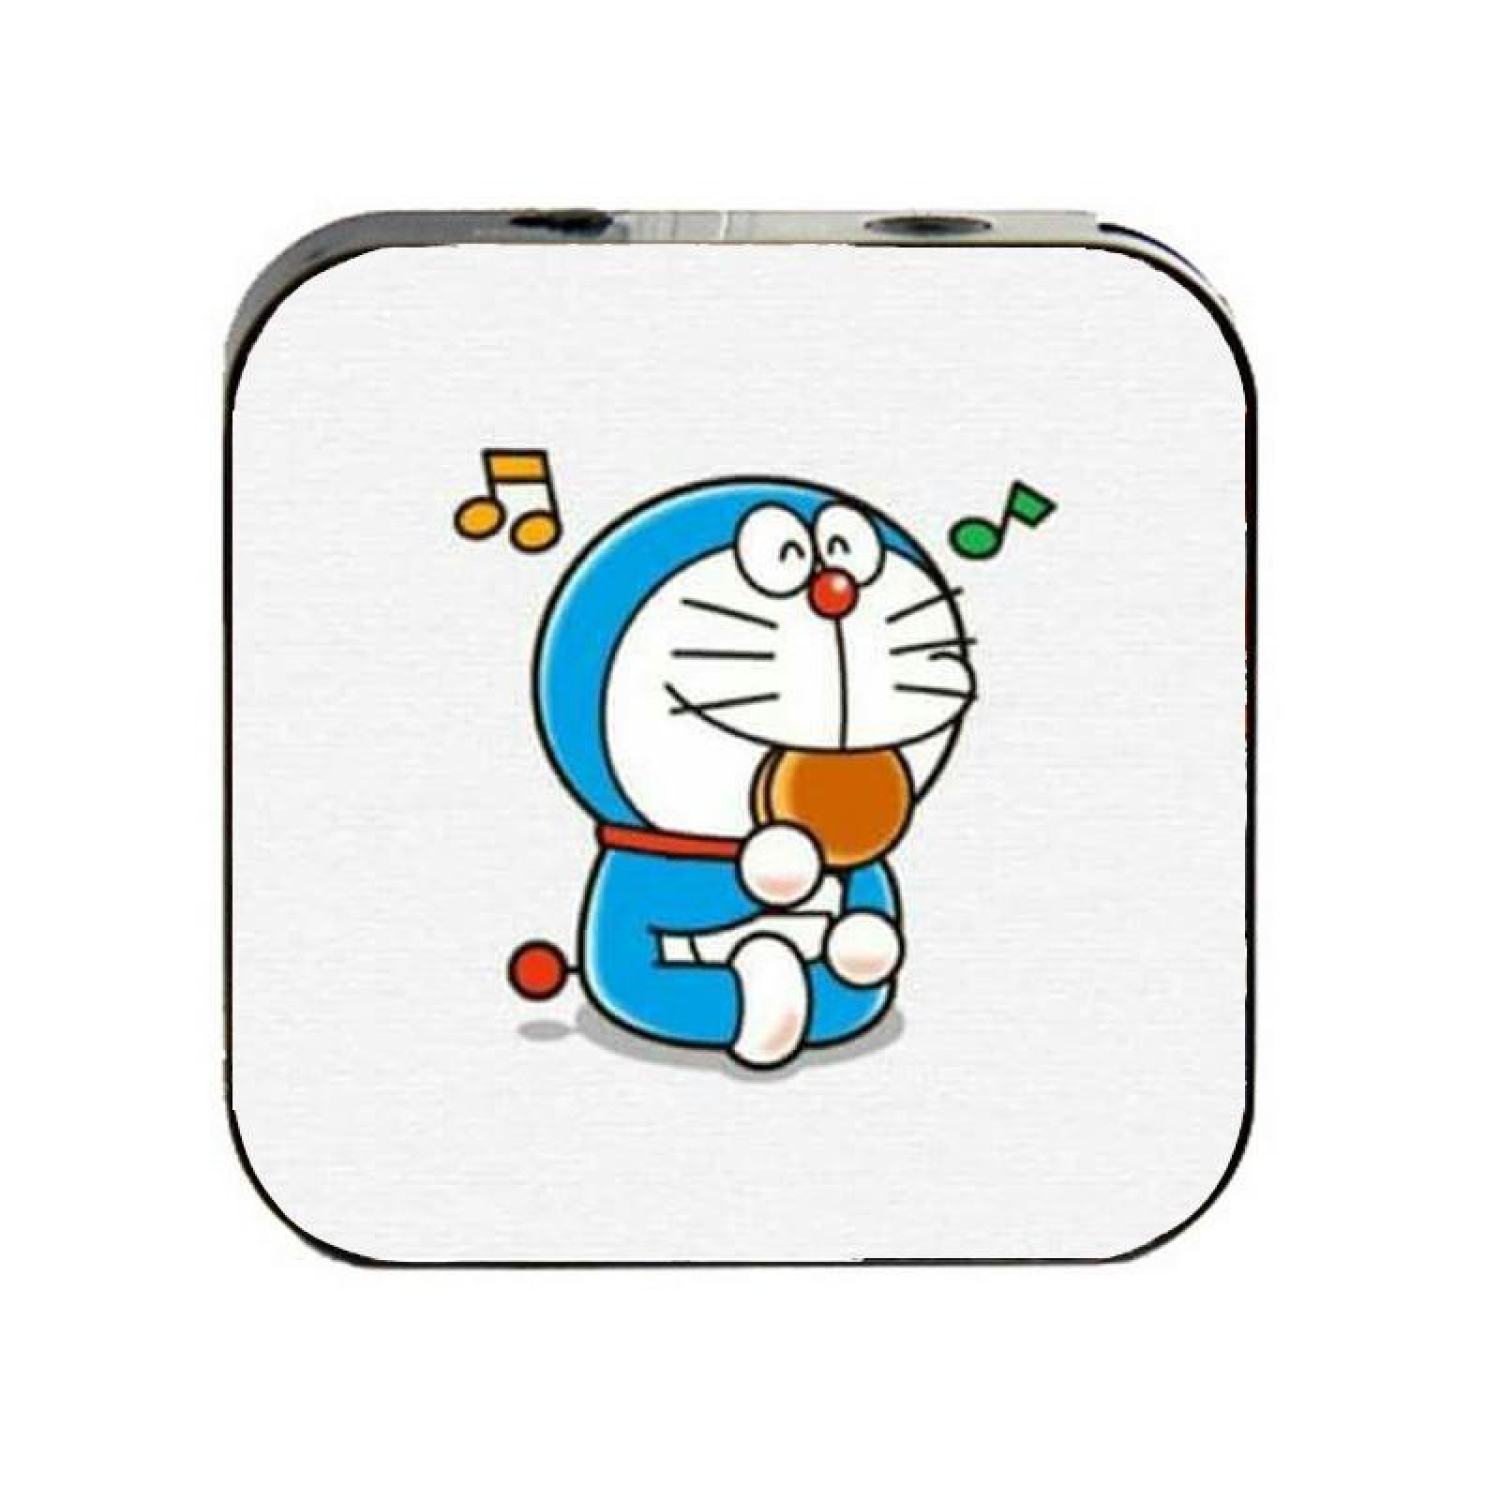 Fan Doraemon - Top ảnh Doraemon cute #4 | Facebook